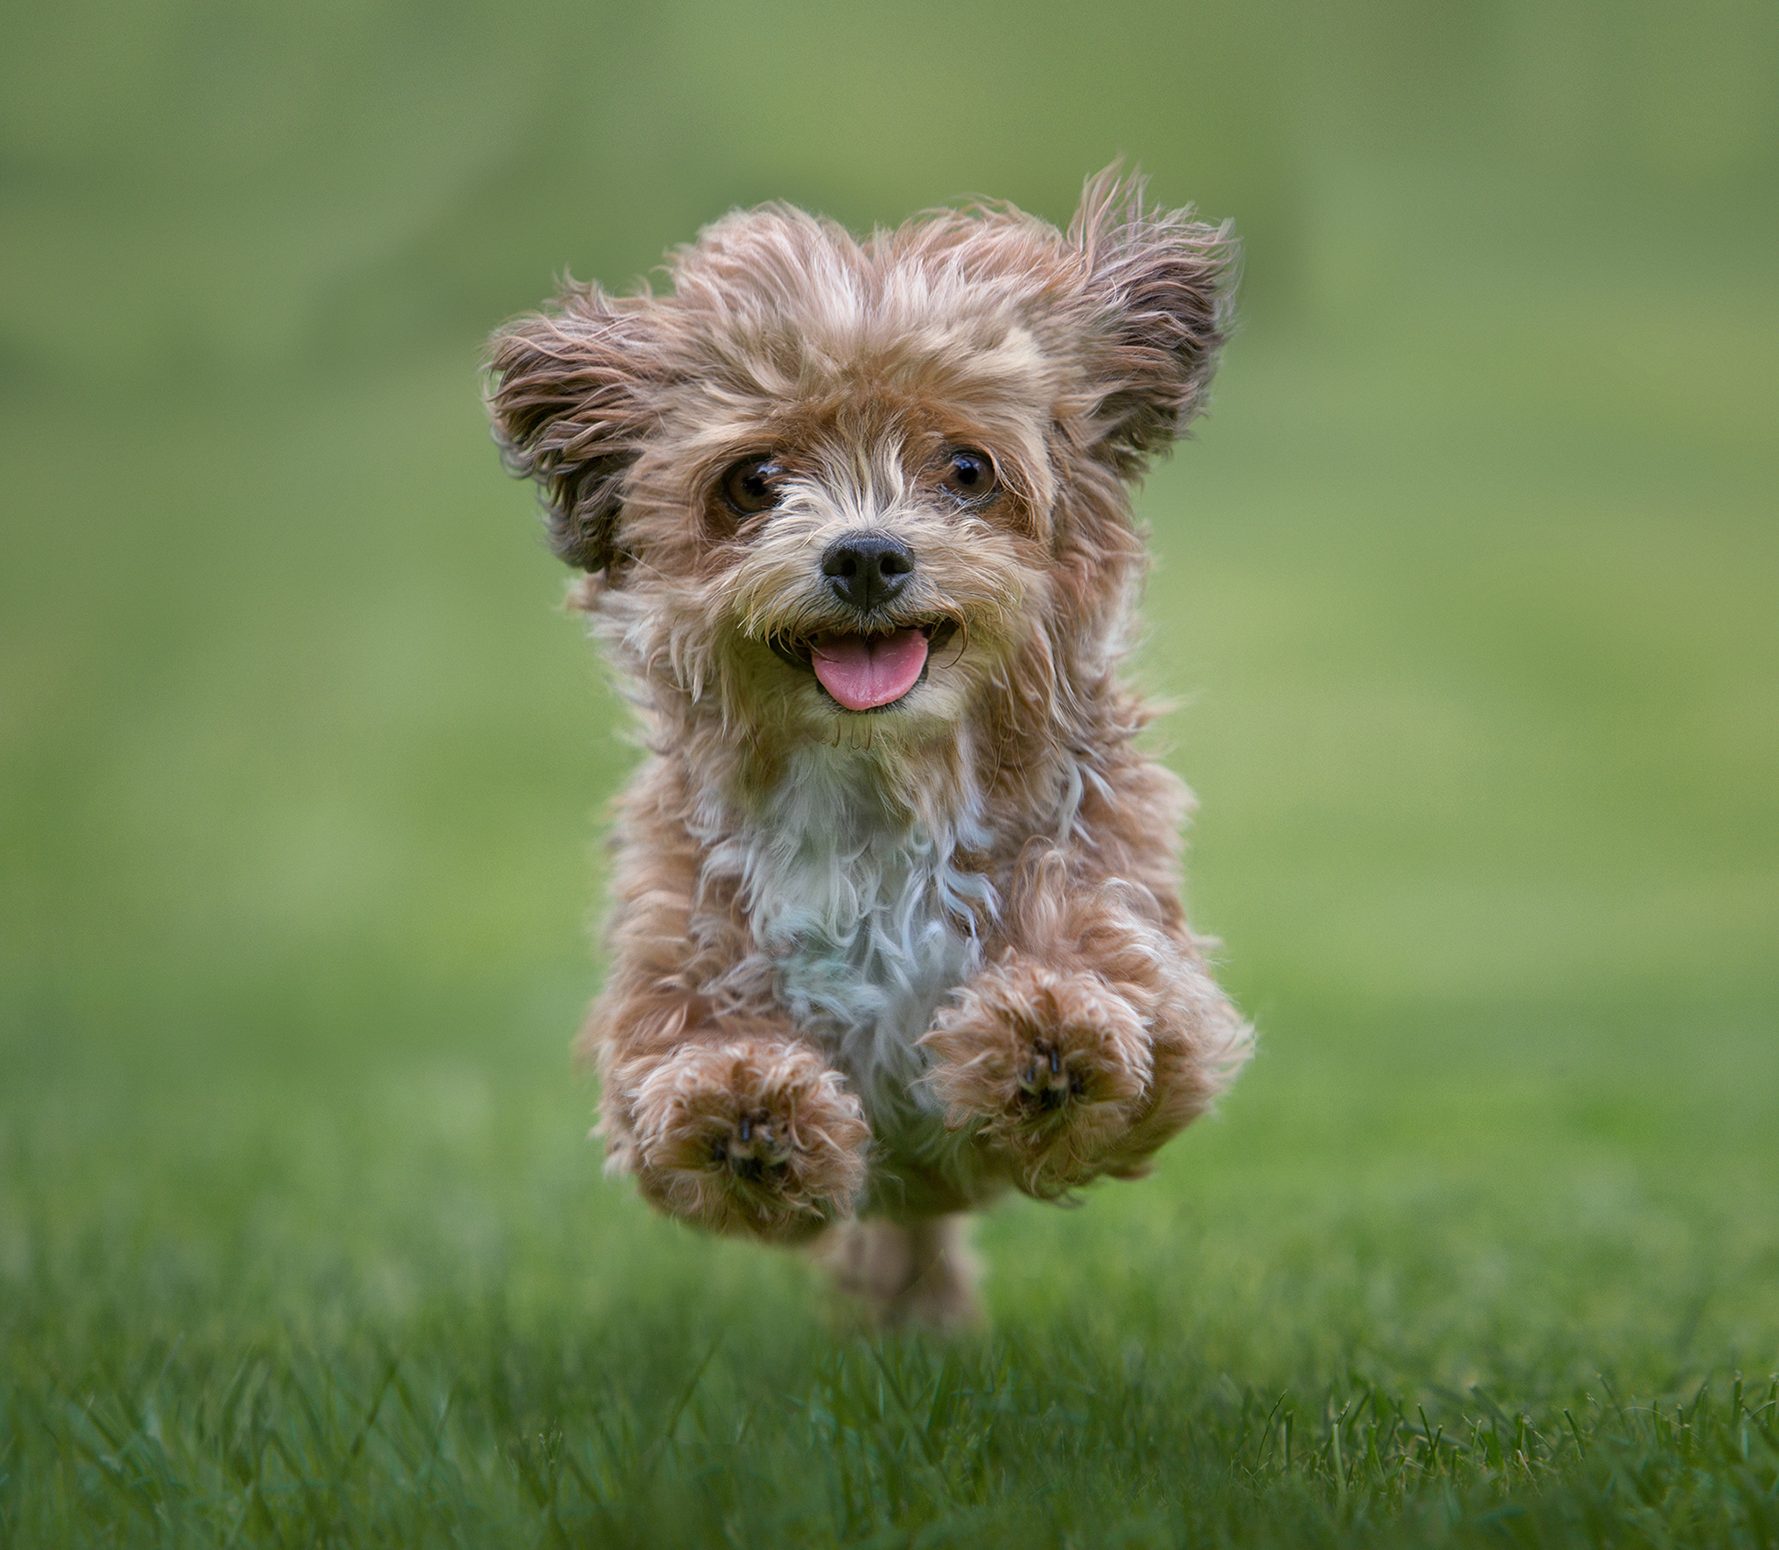 A cute running dog